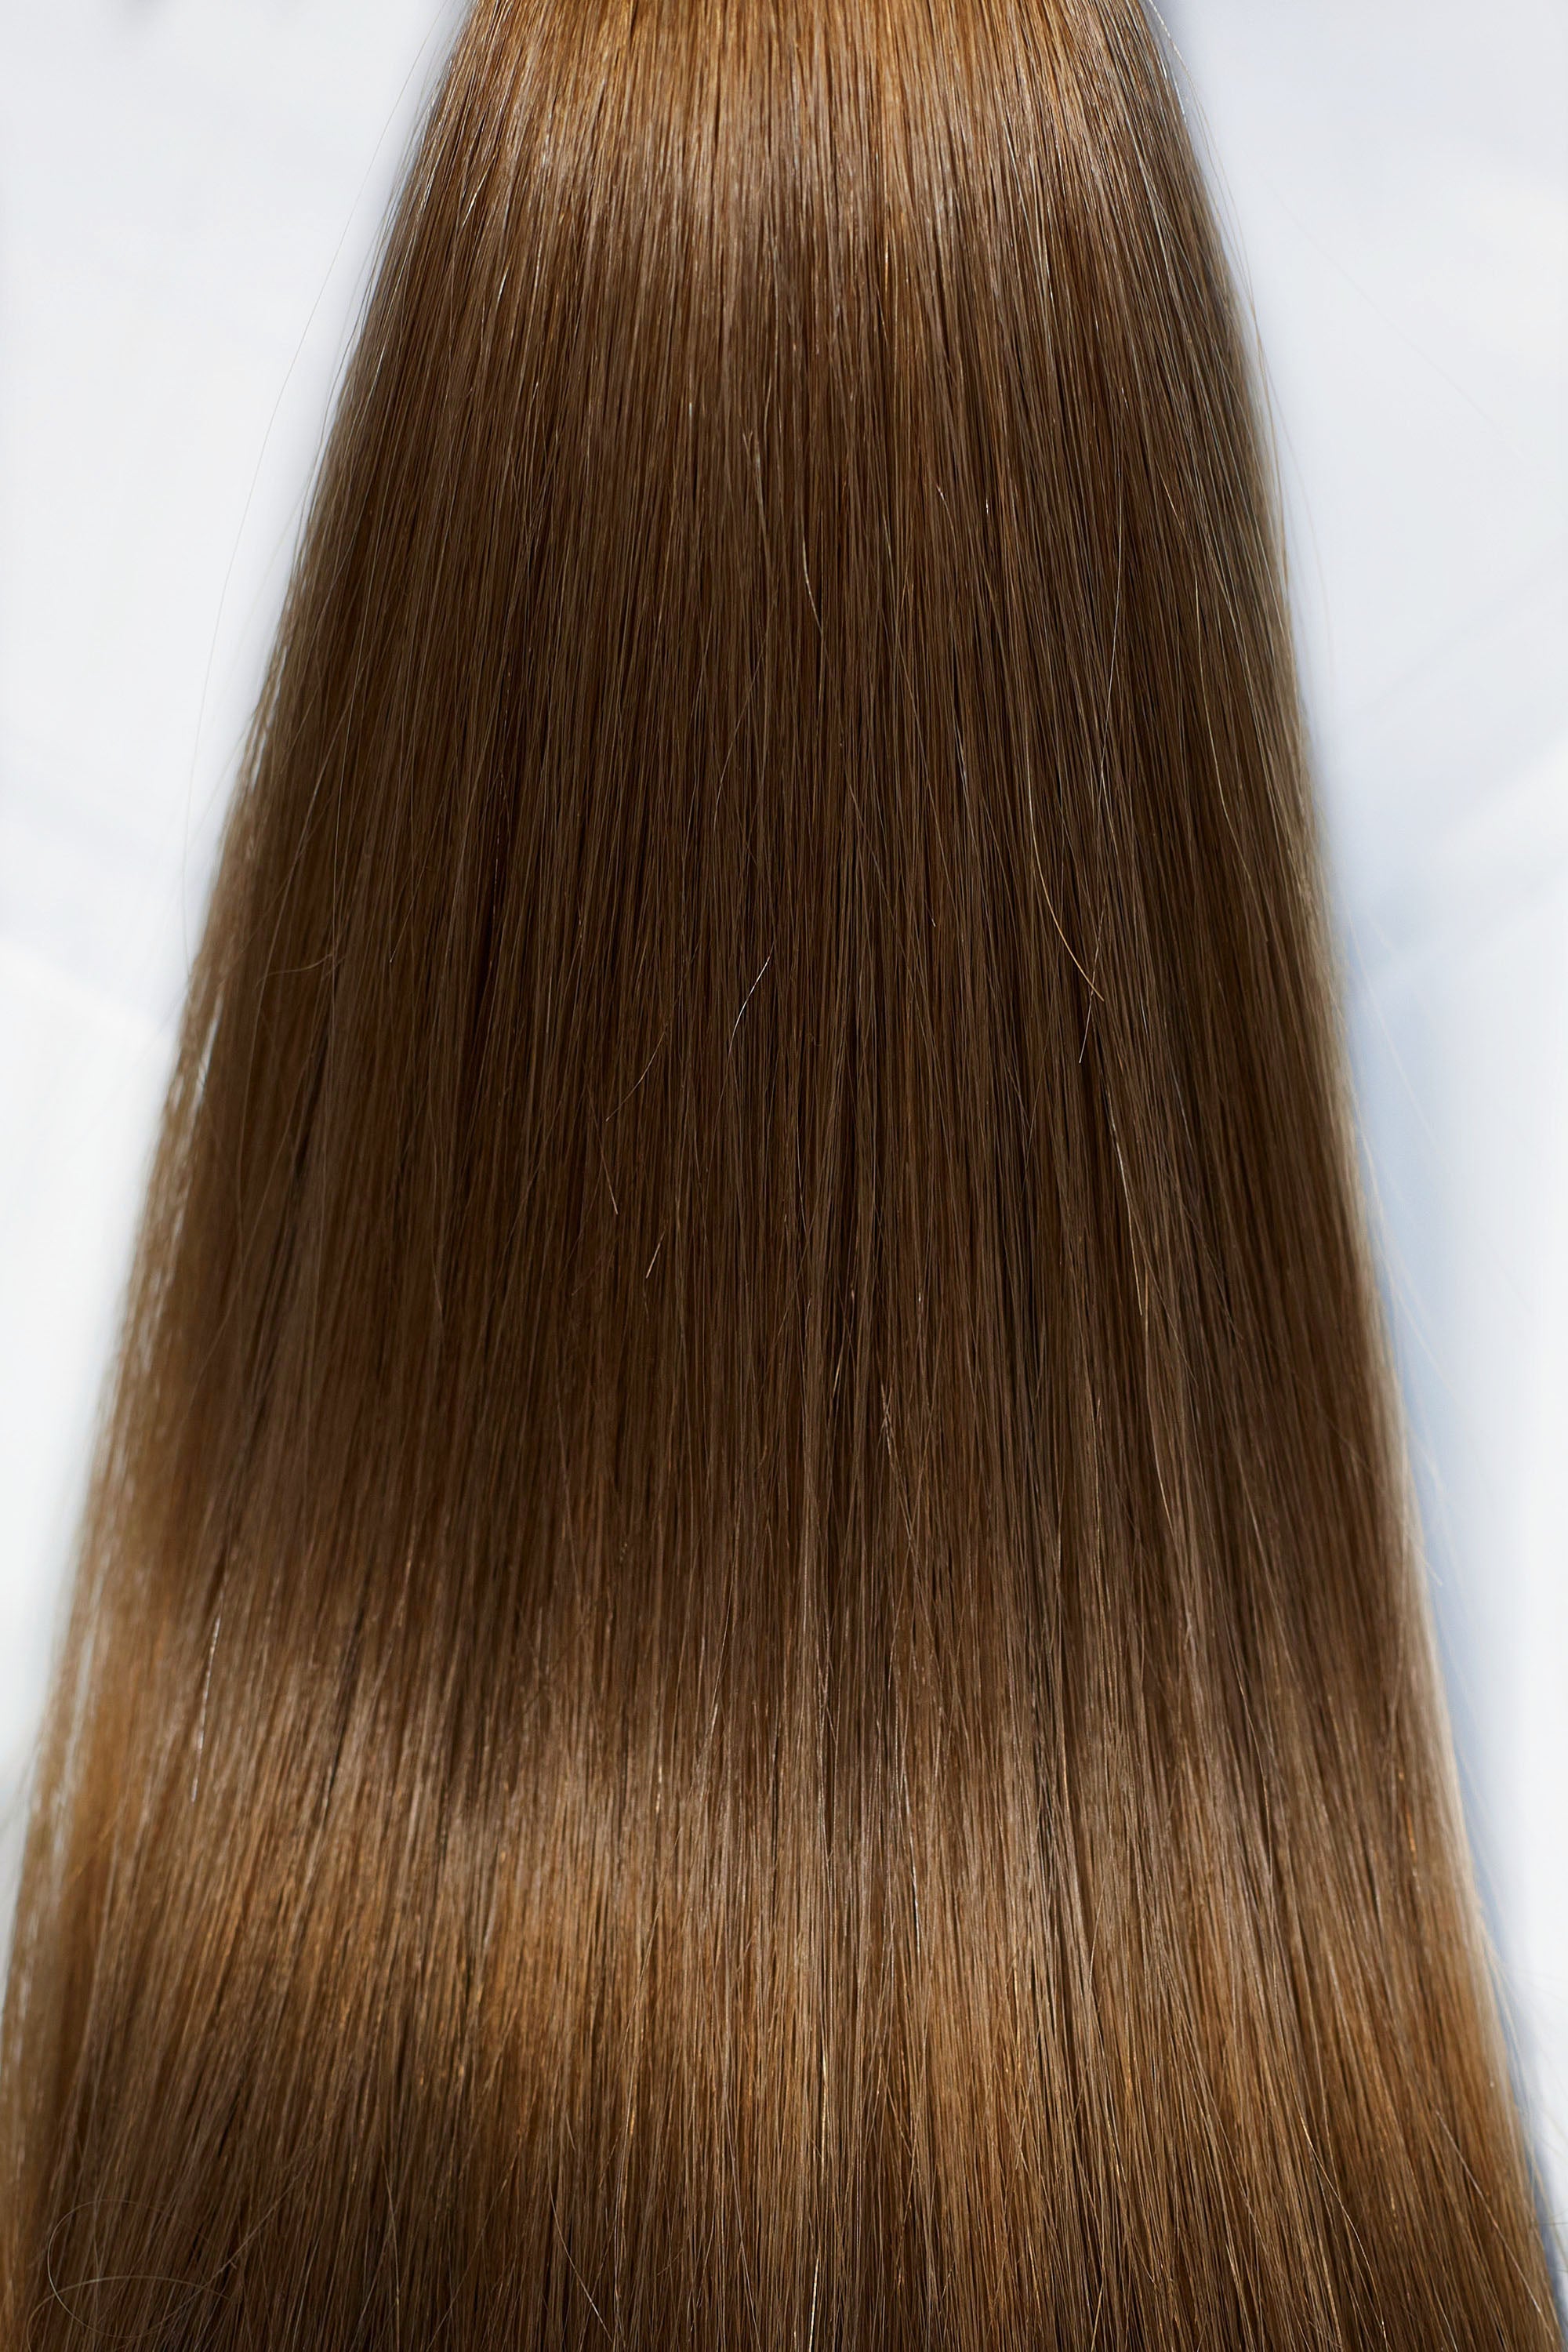 Behair professional Keratin Tip "Premium" 24" (60cm) Natural Straight Chestnut #6 - 25g (Micro - 0.5g each pcs) hair extensions